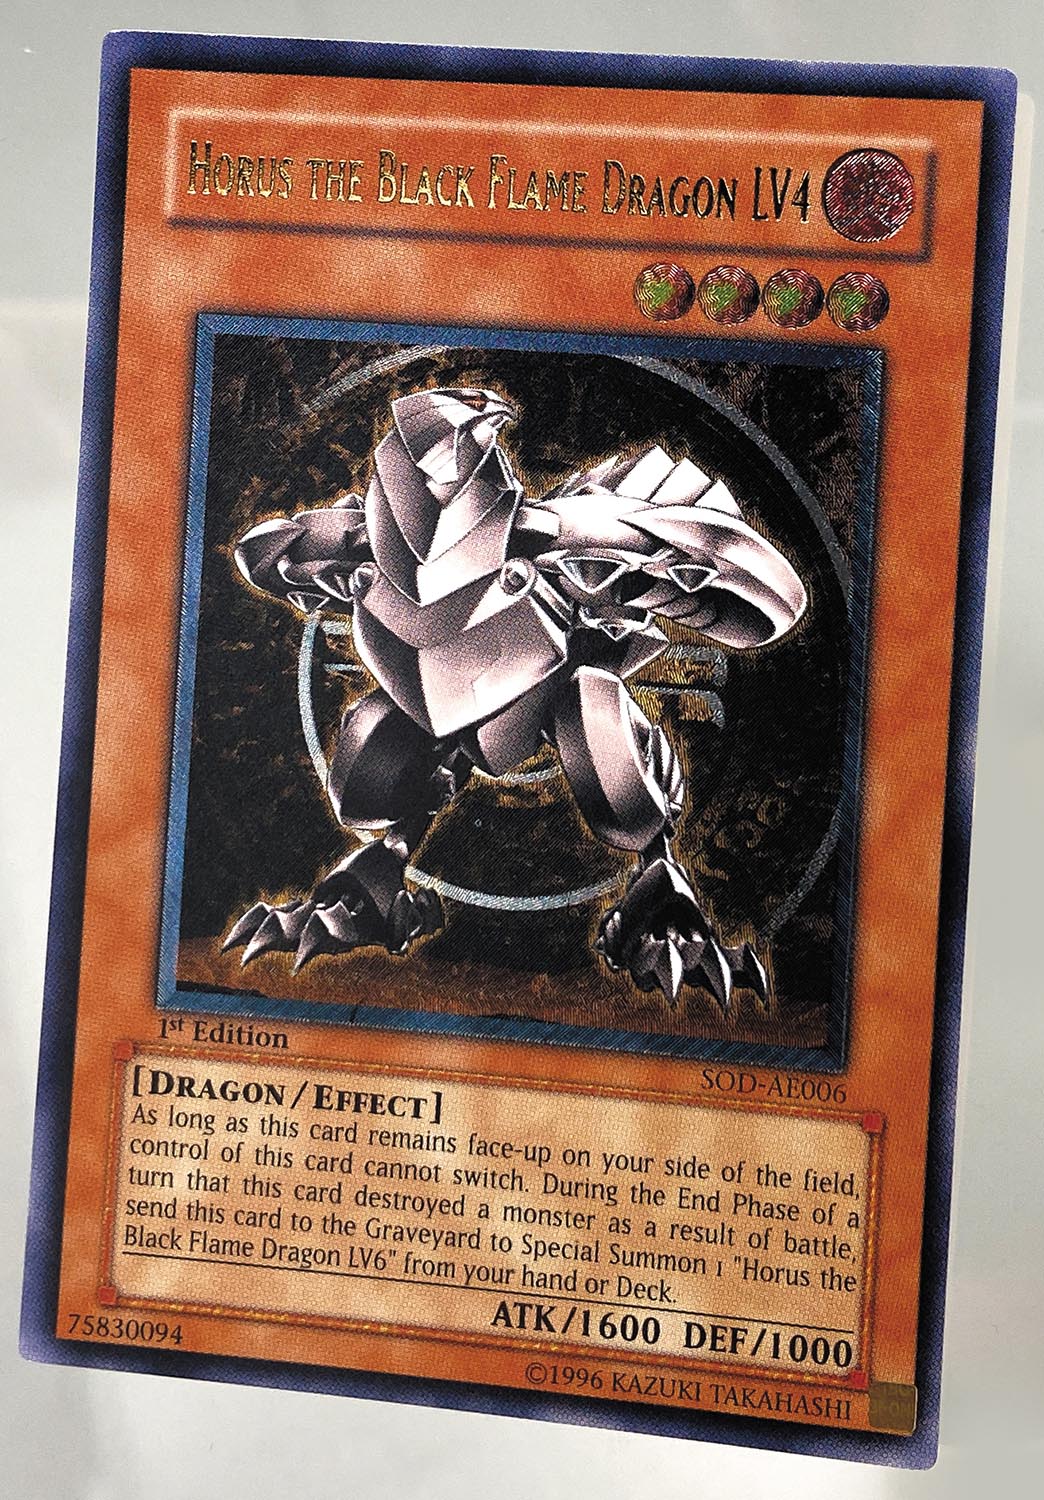 Horus the Black Flame Dragon LV4 : YuGiOh Card Prices